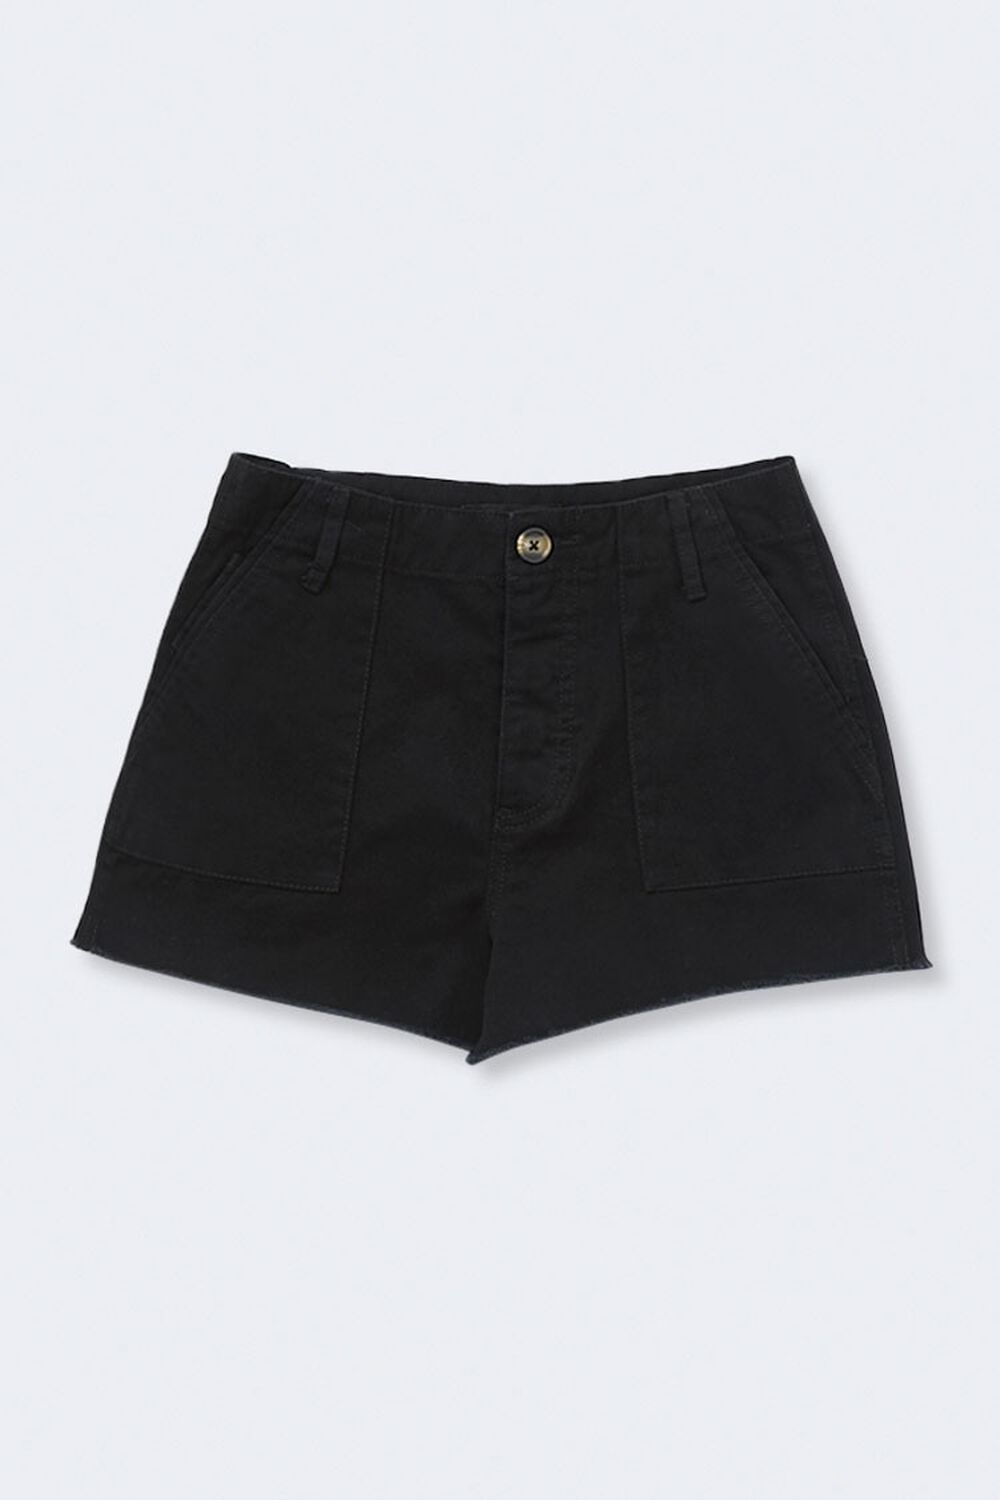 BLACK Distressed Cotton Shorts, image 1